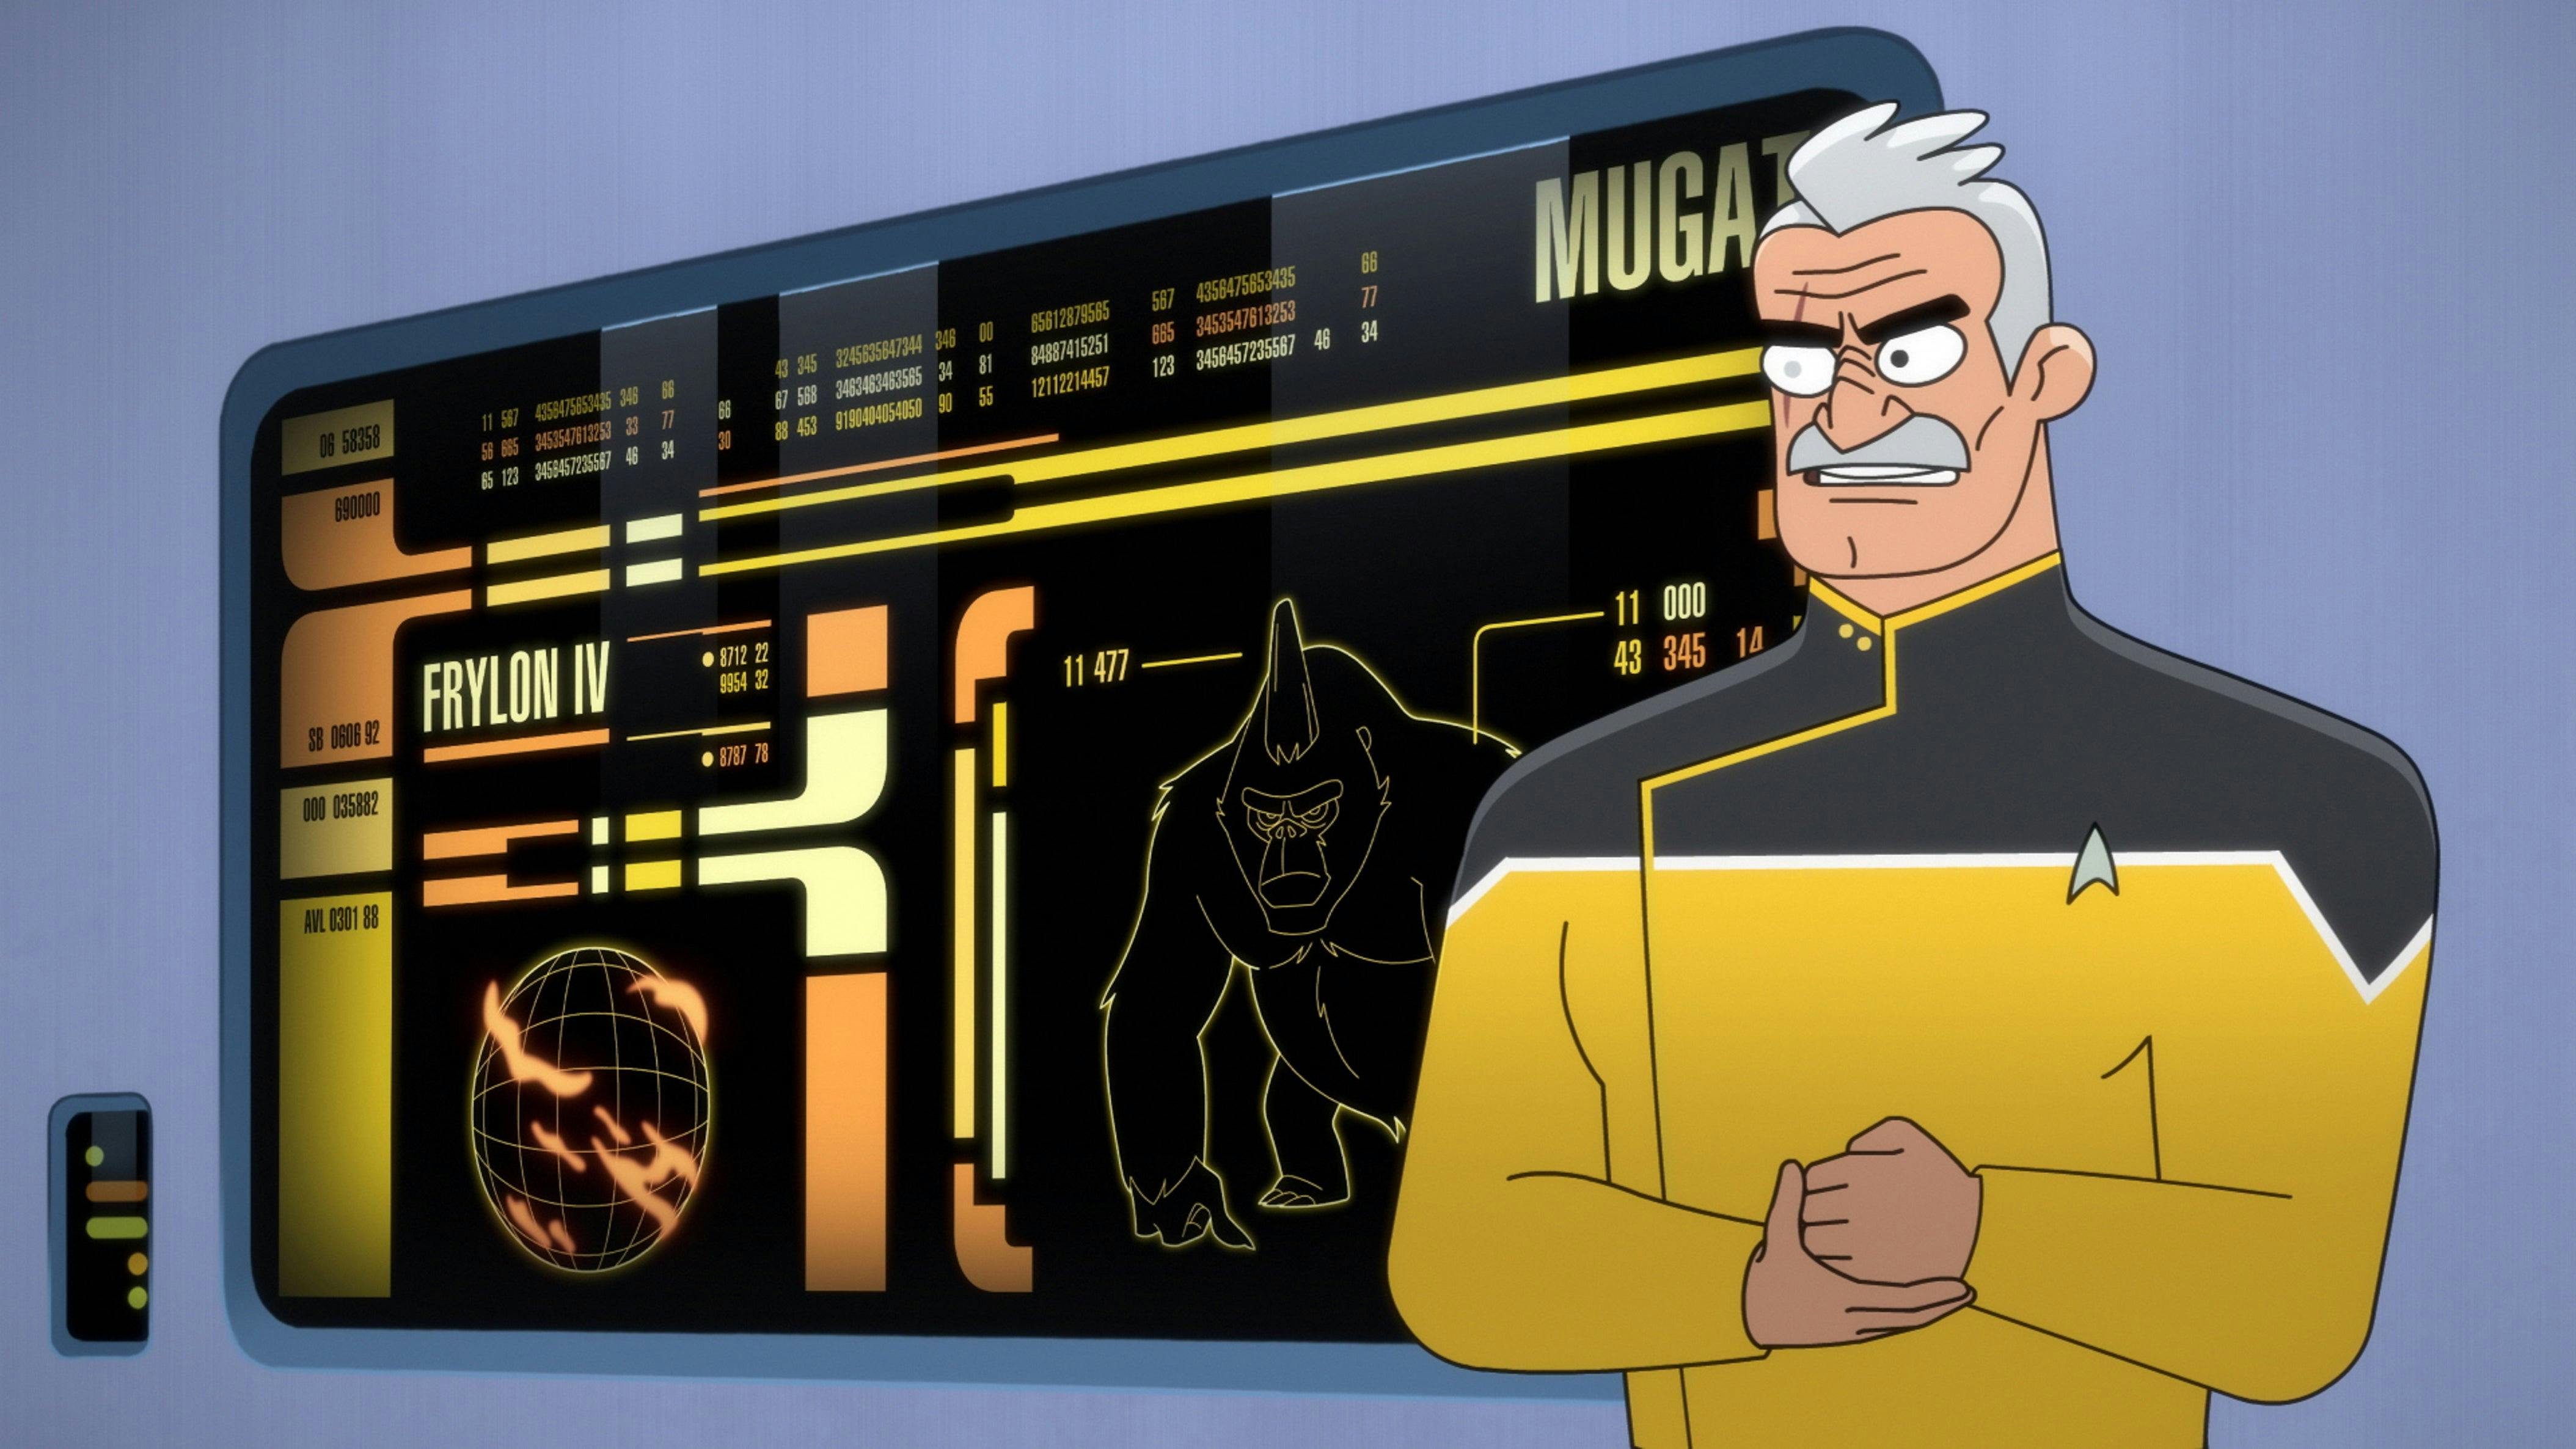 Star Trek: Lower Decks - "Mugato, Gumato"